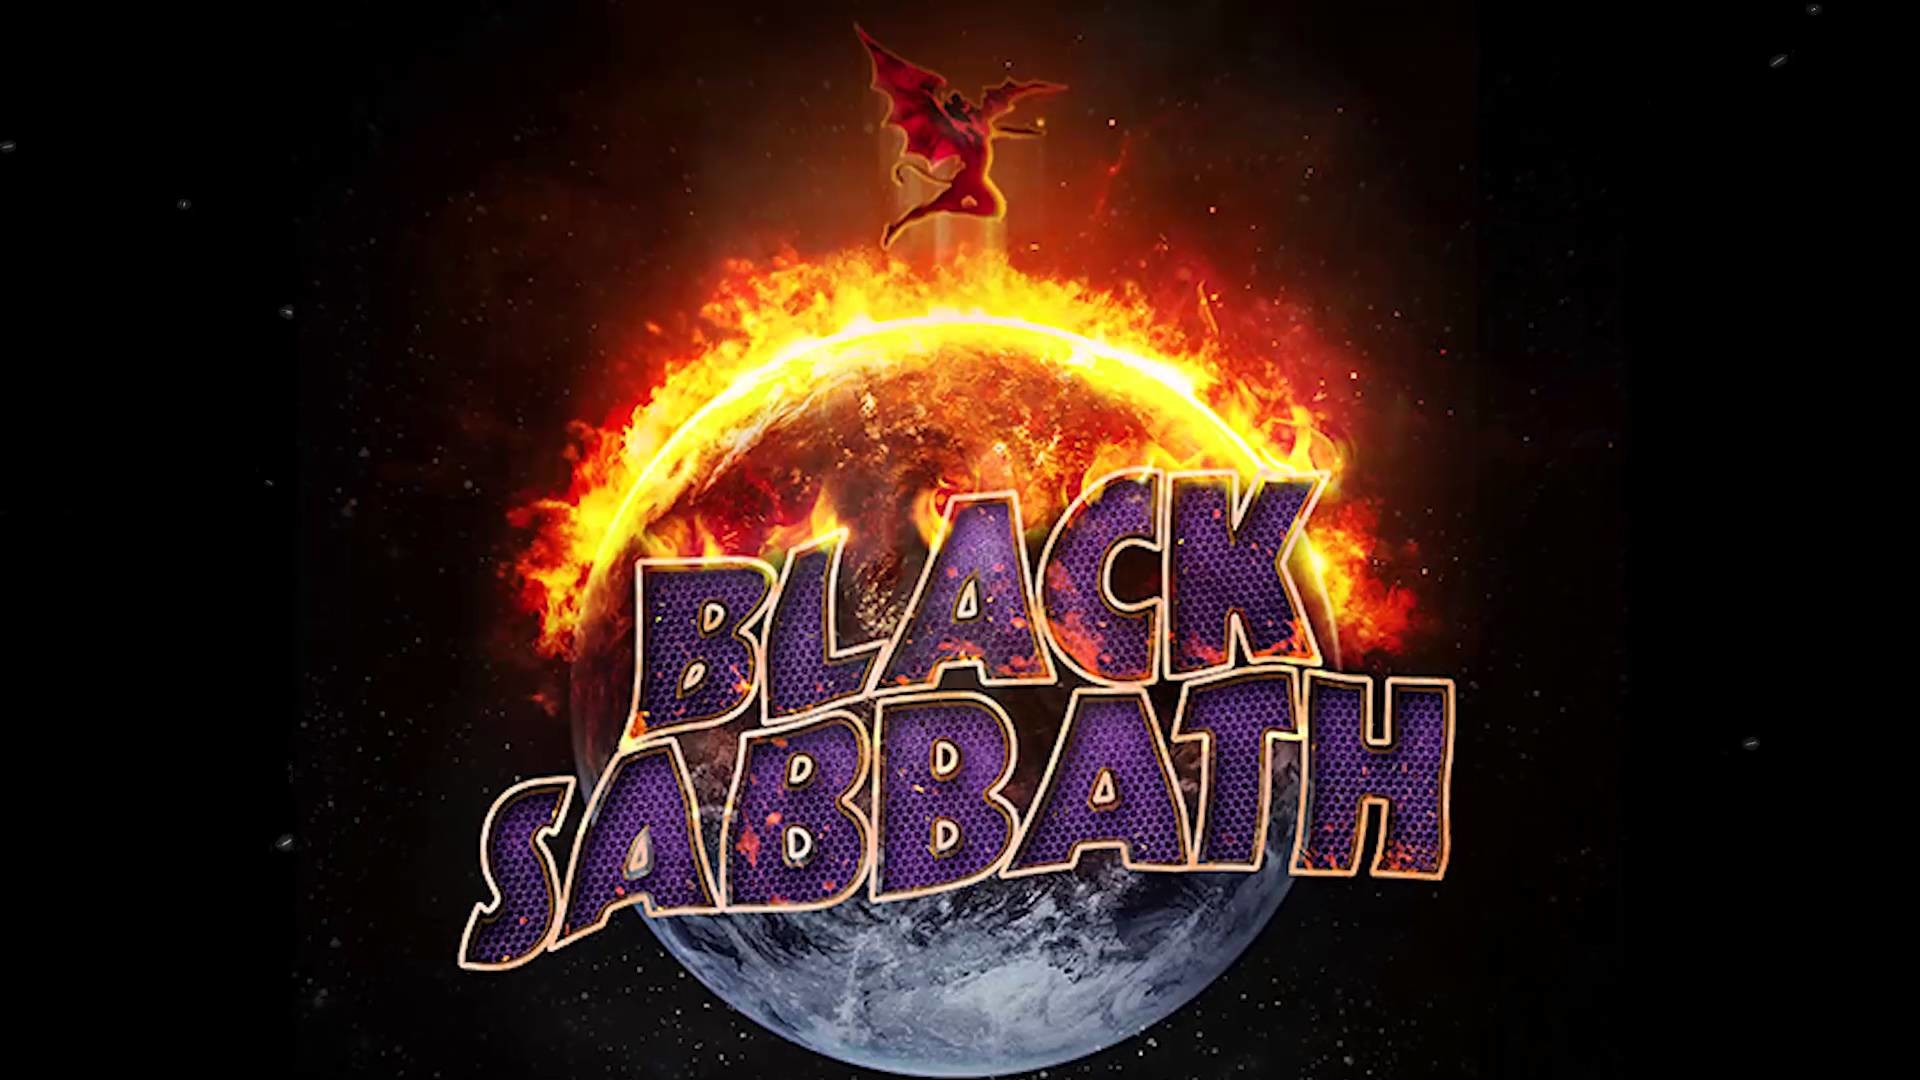  Black  Sabbath  Wallpapers    WallpaperTag